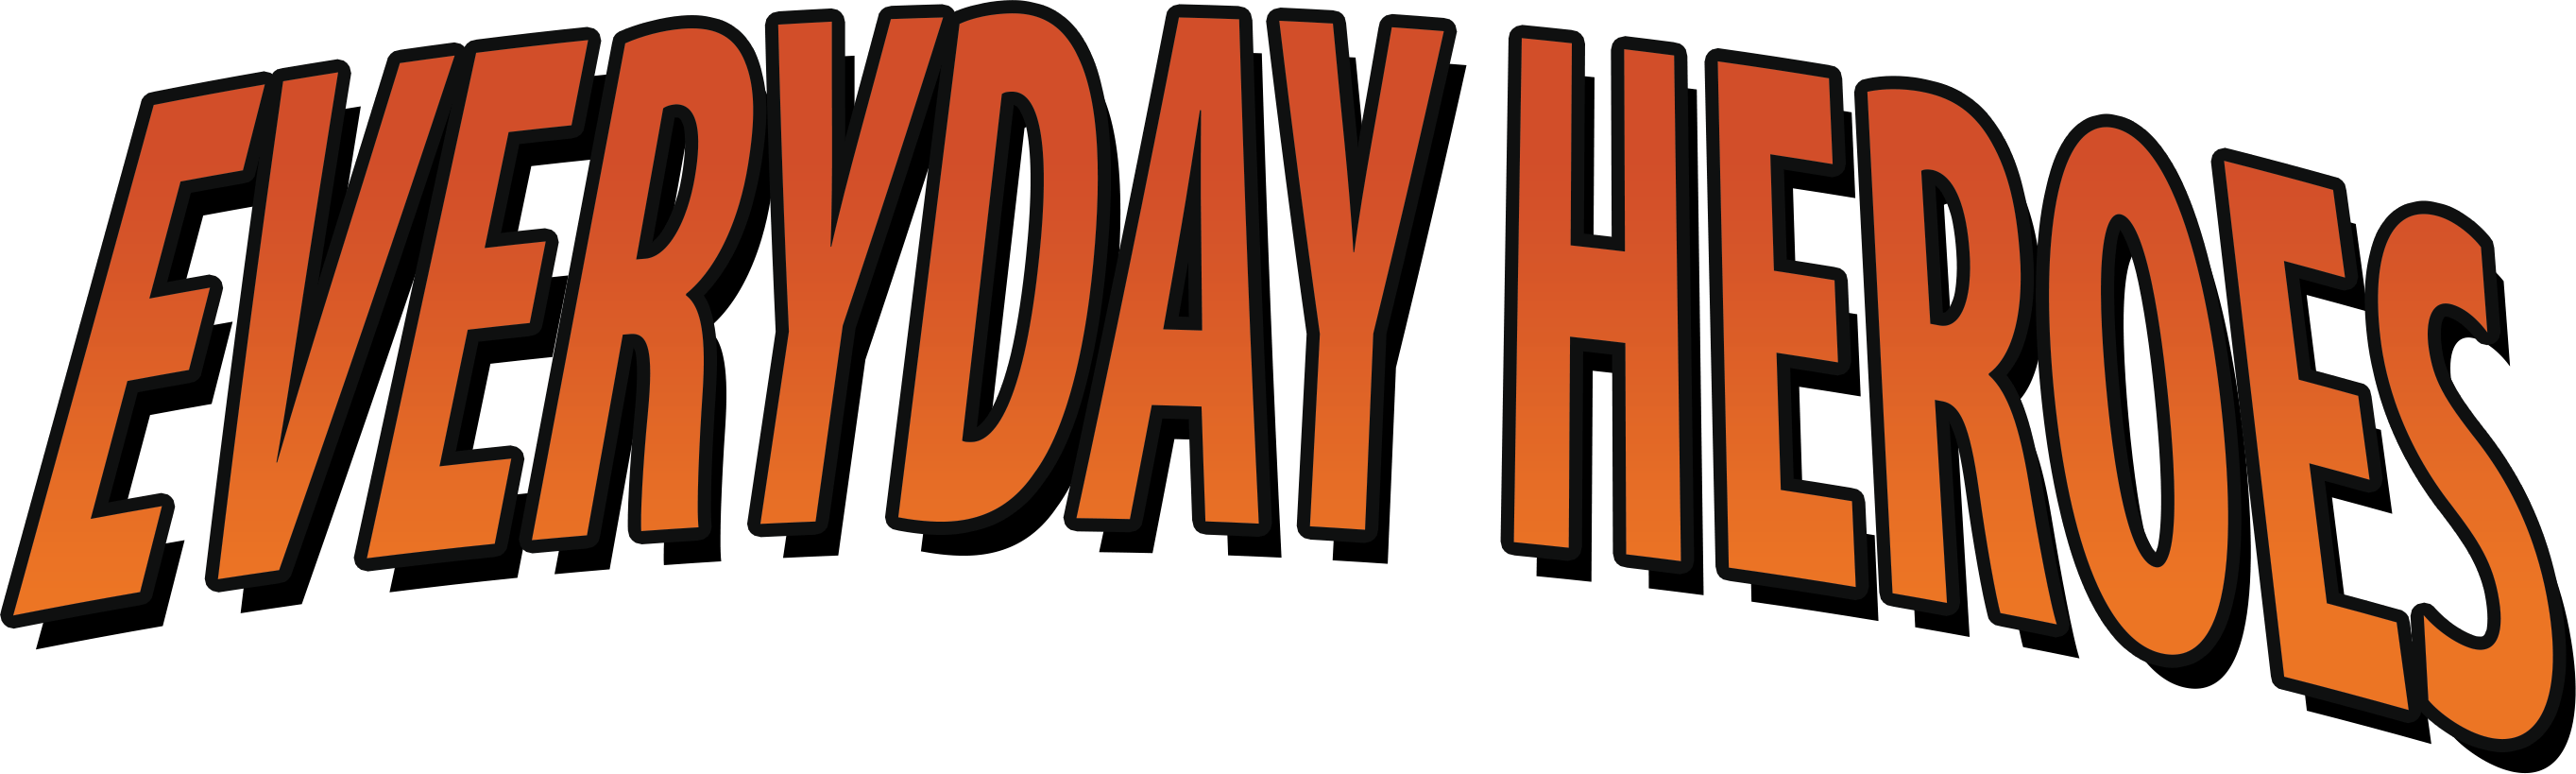 Everyday Logo - Everyday Heroes